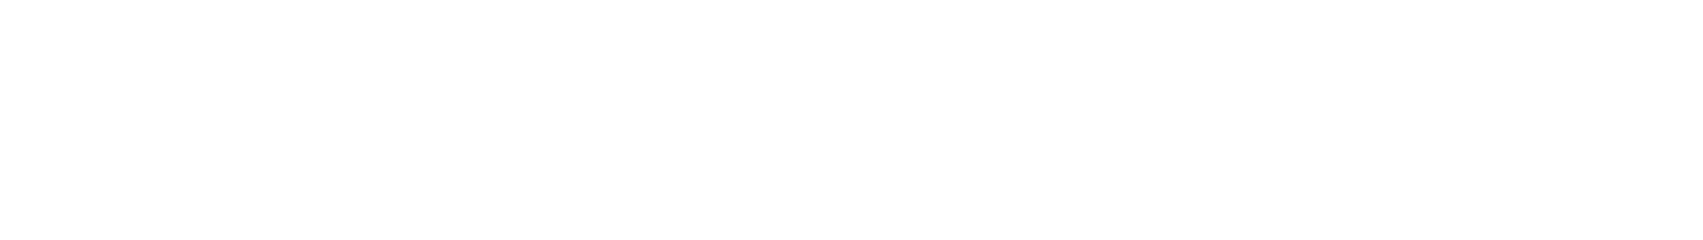 comicave-logo